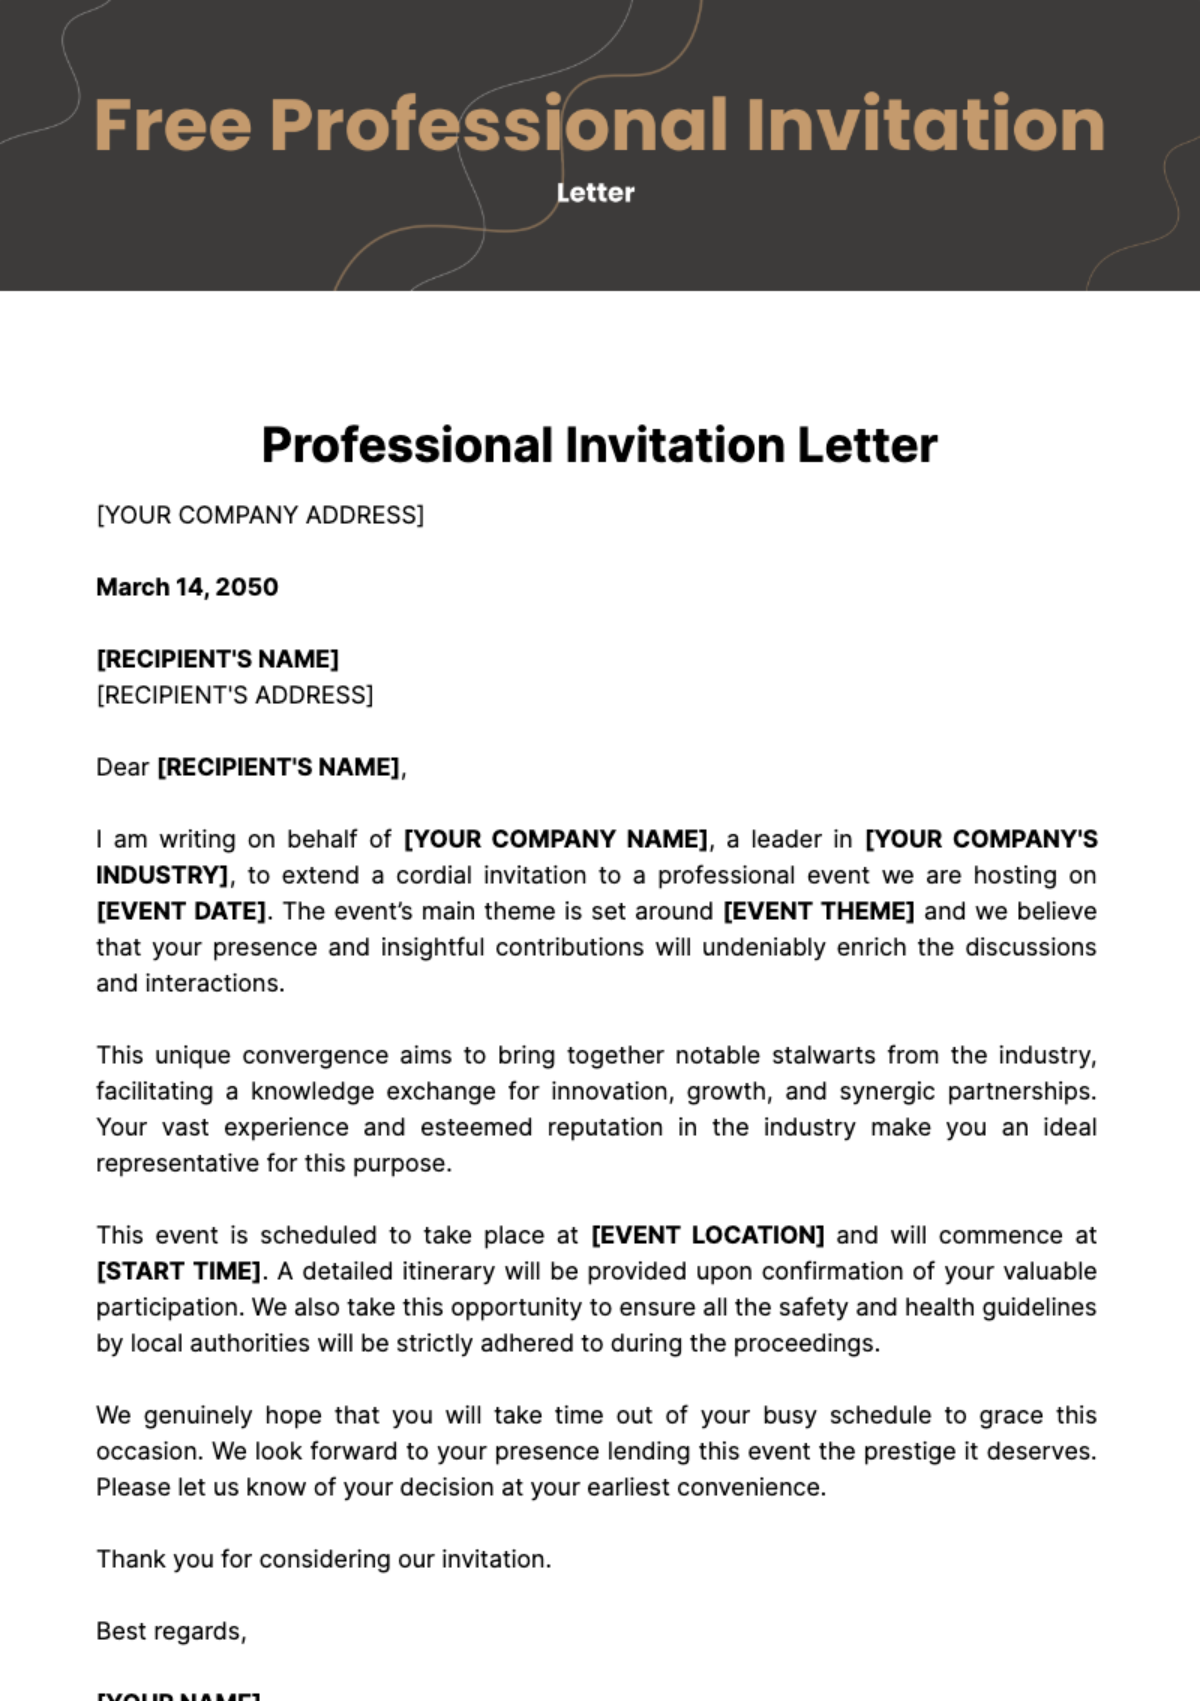 Free Professional Invitation Letter Template